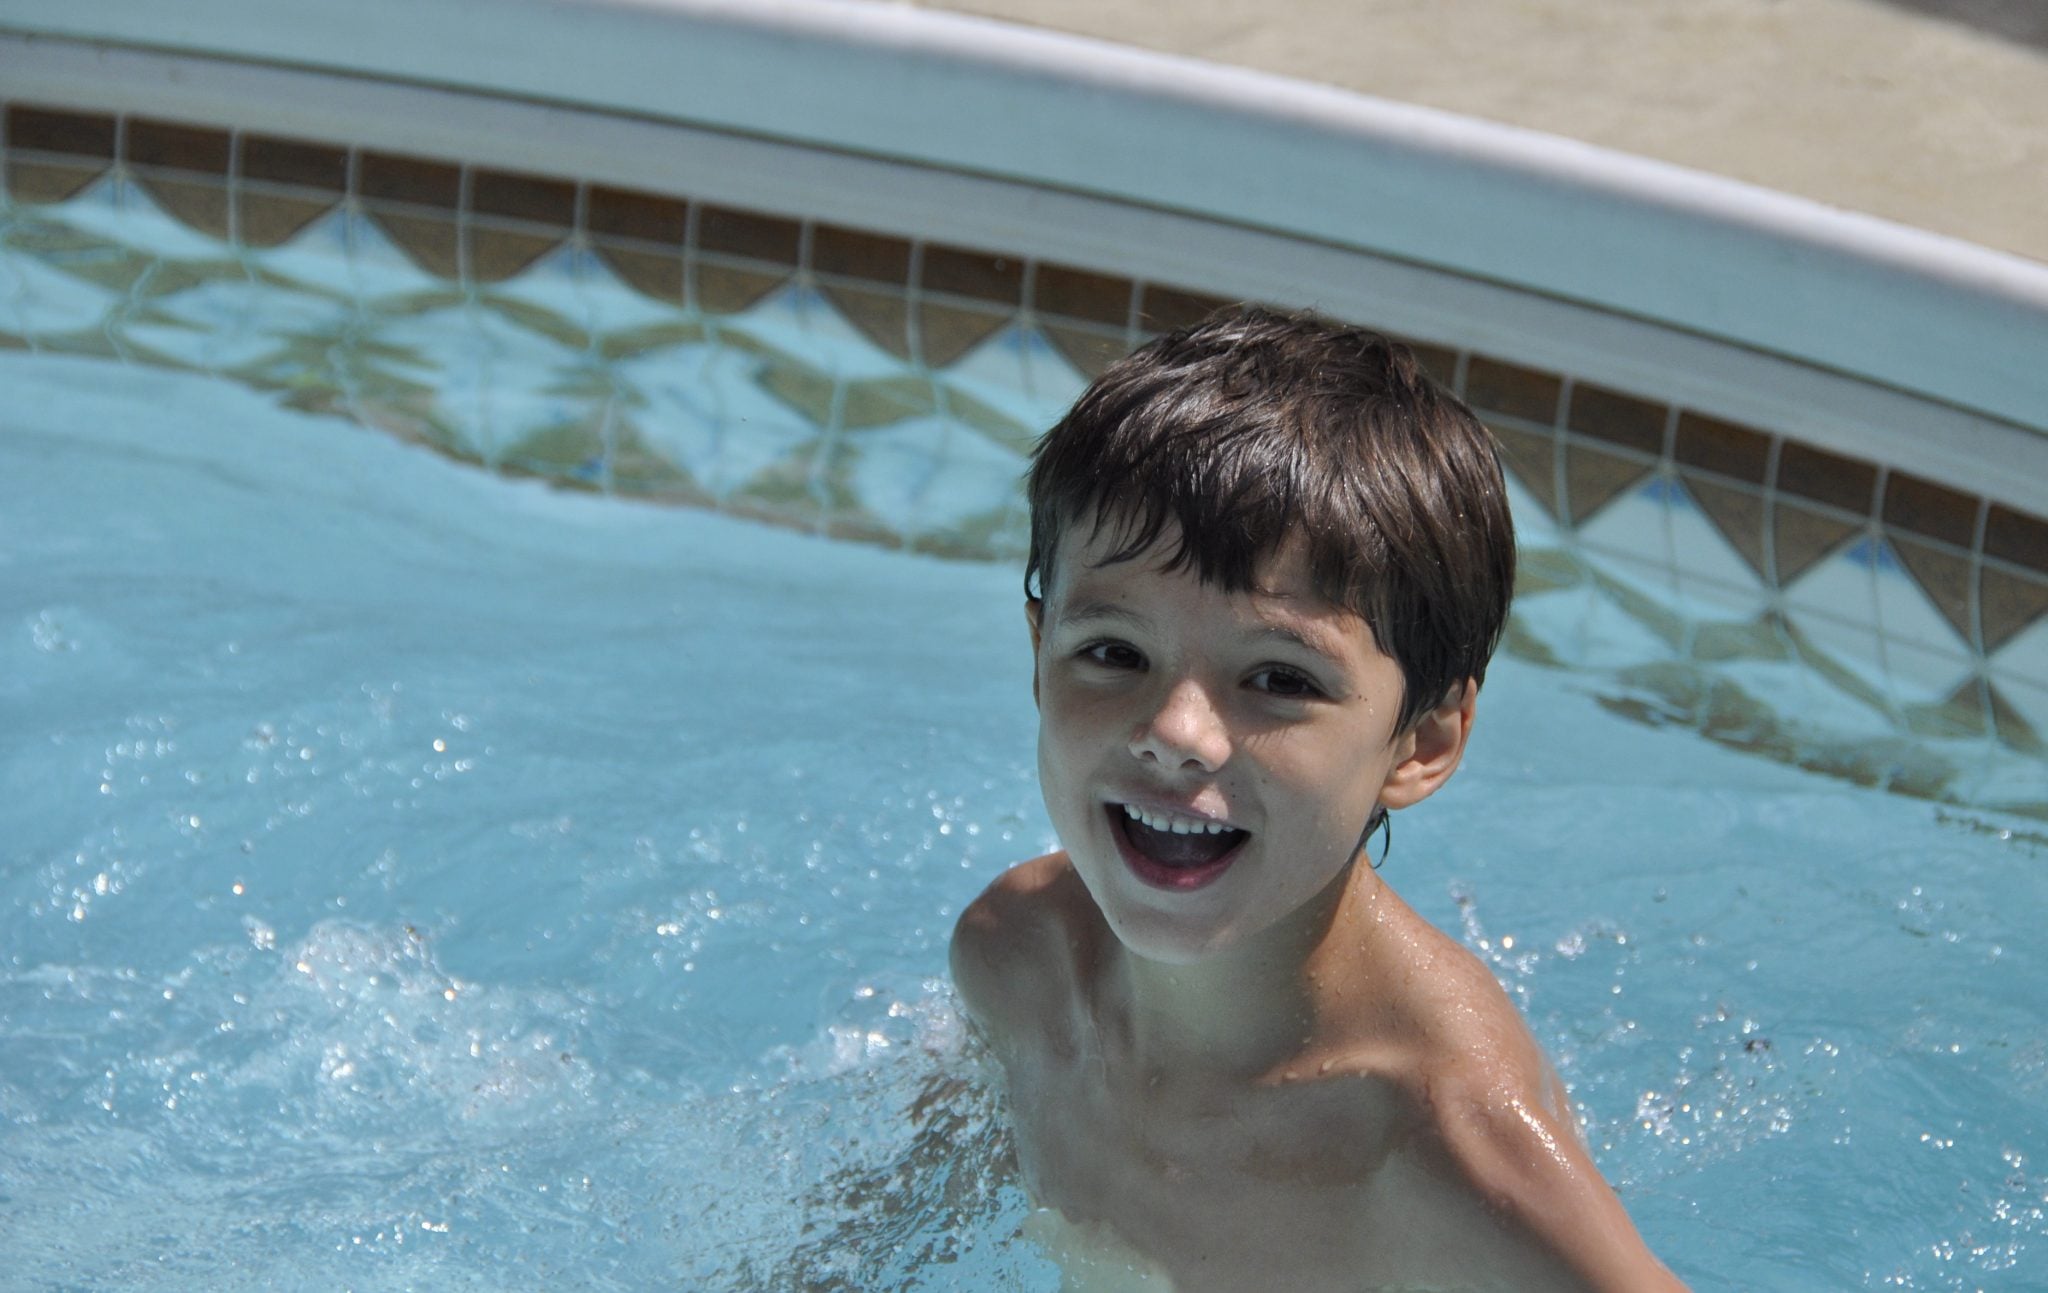 Chlorine in Pools: How Chlorine Keeps Pools Safe - Chemical Safety